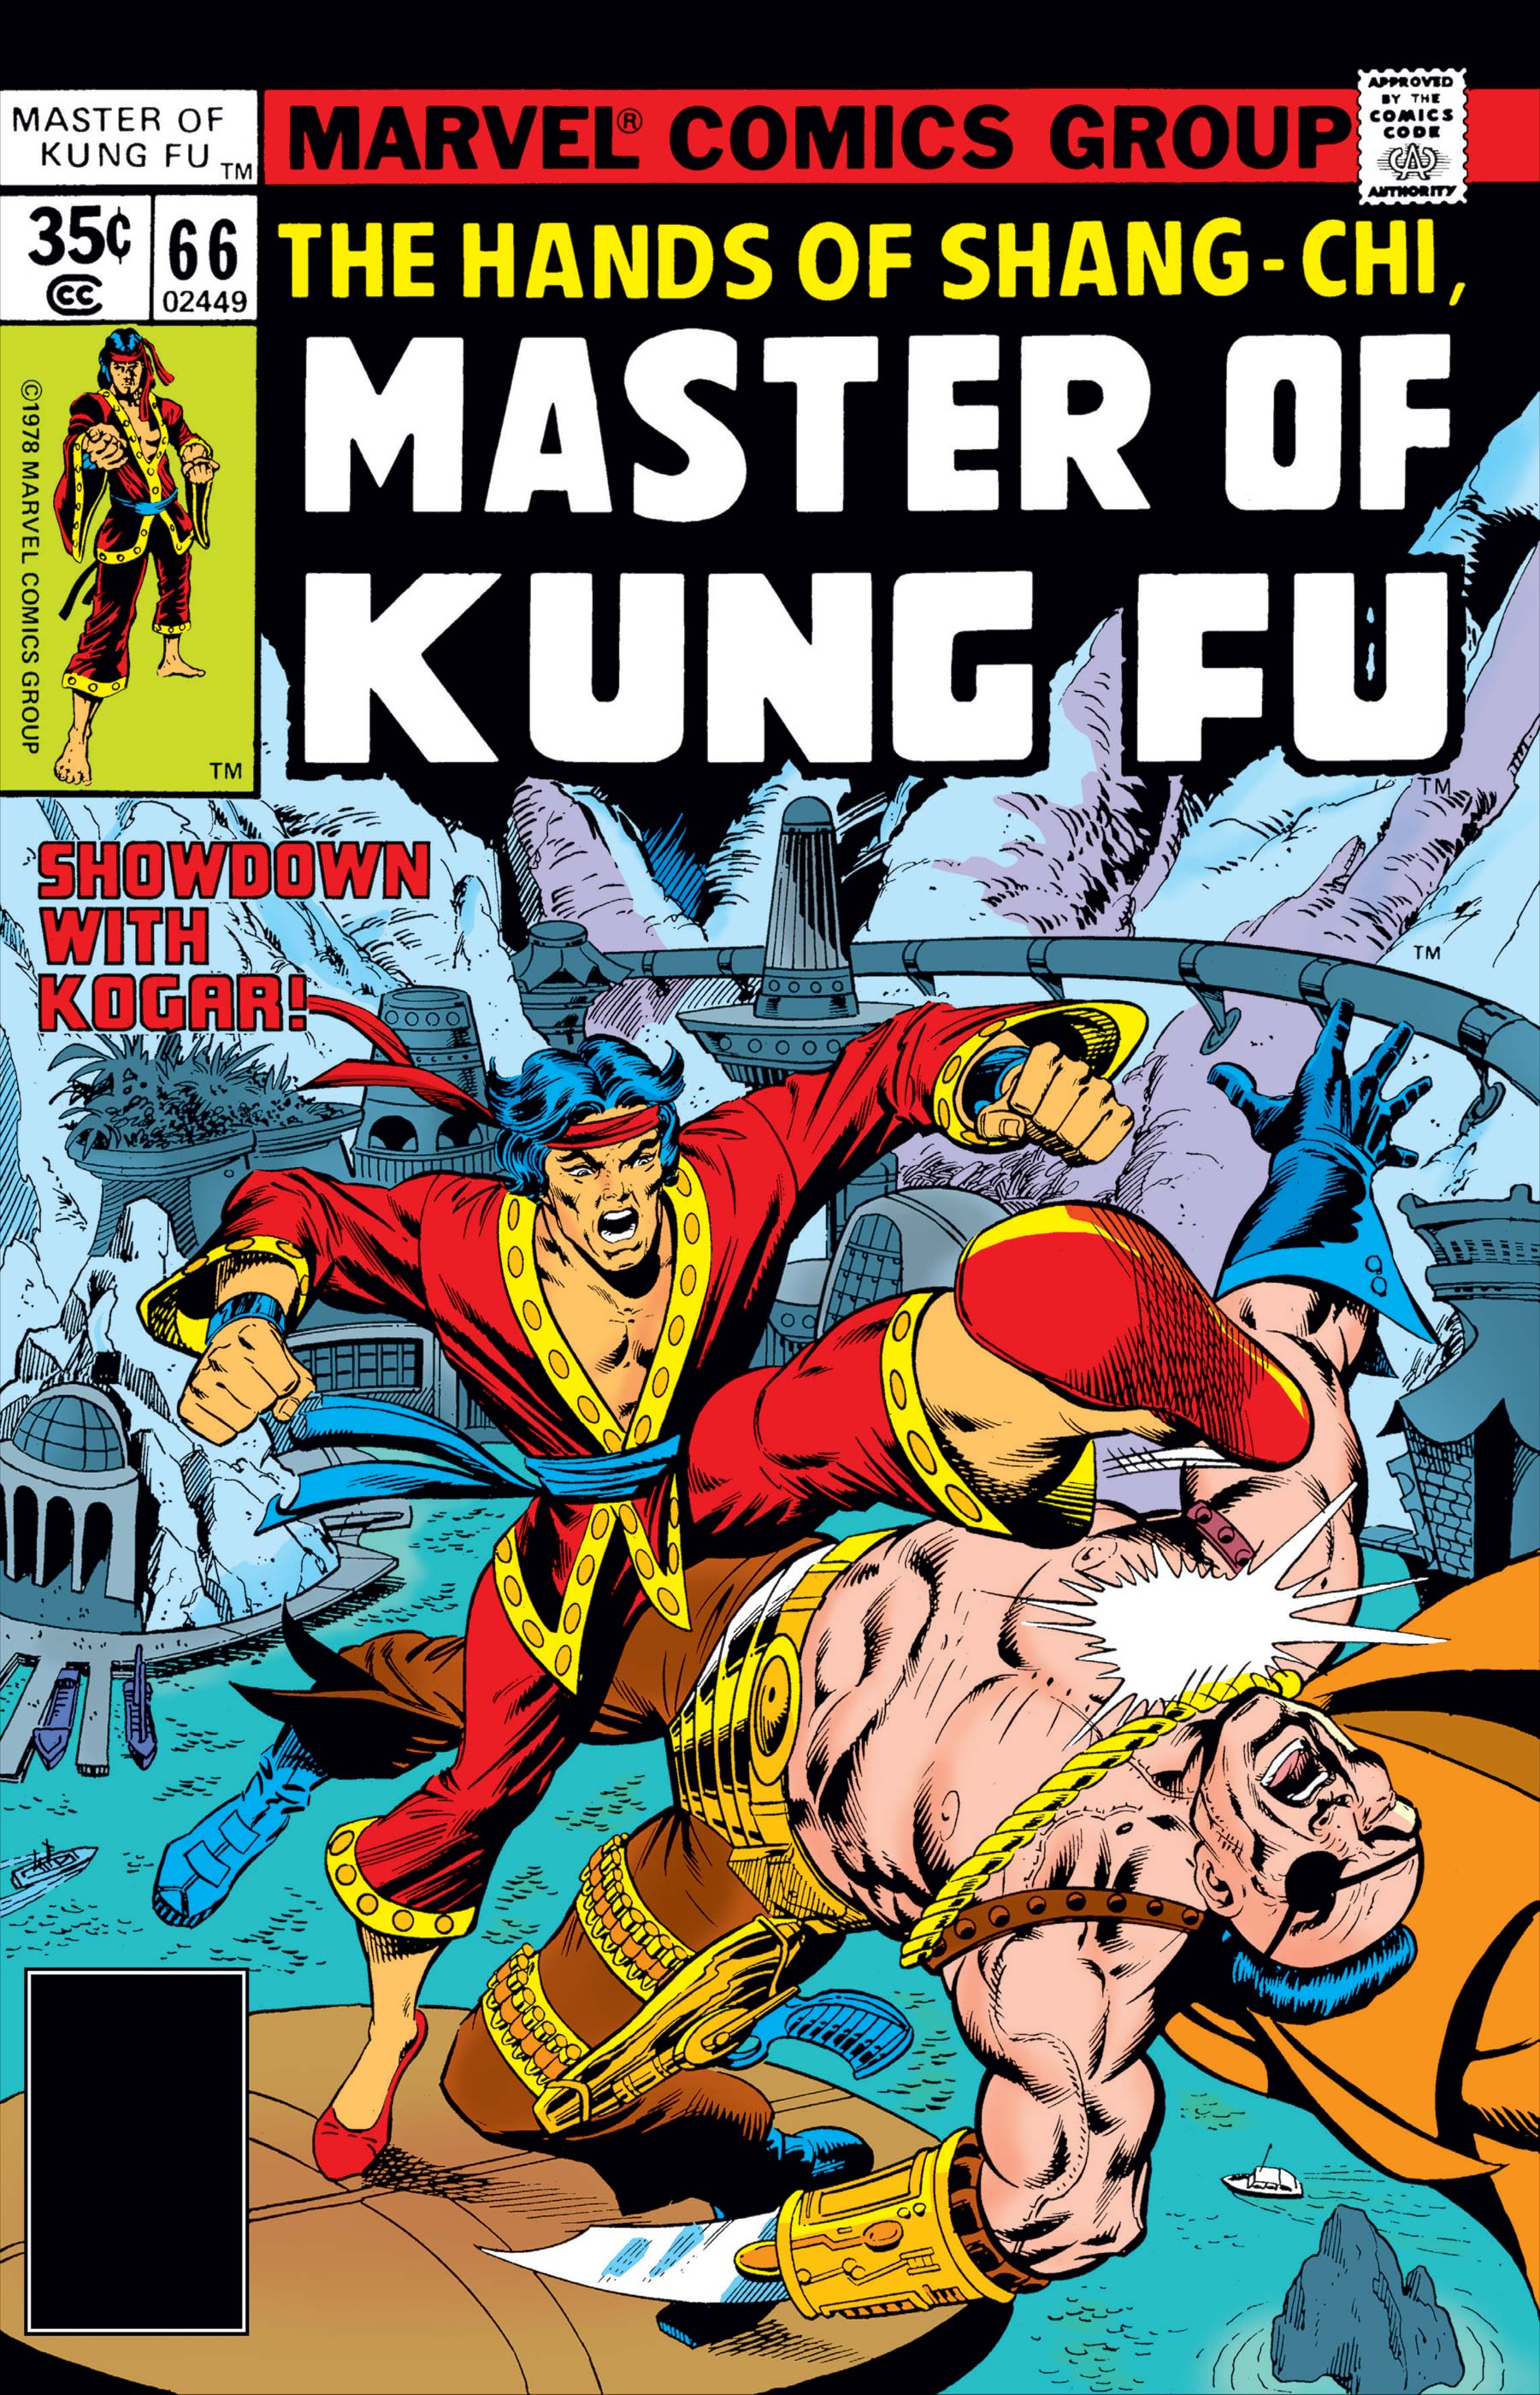 Master of Kung Fu (1974) #66